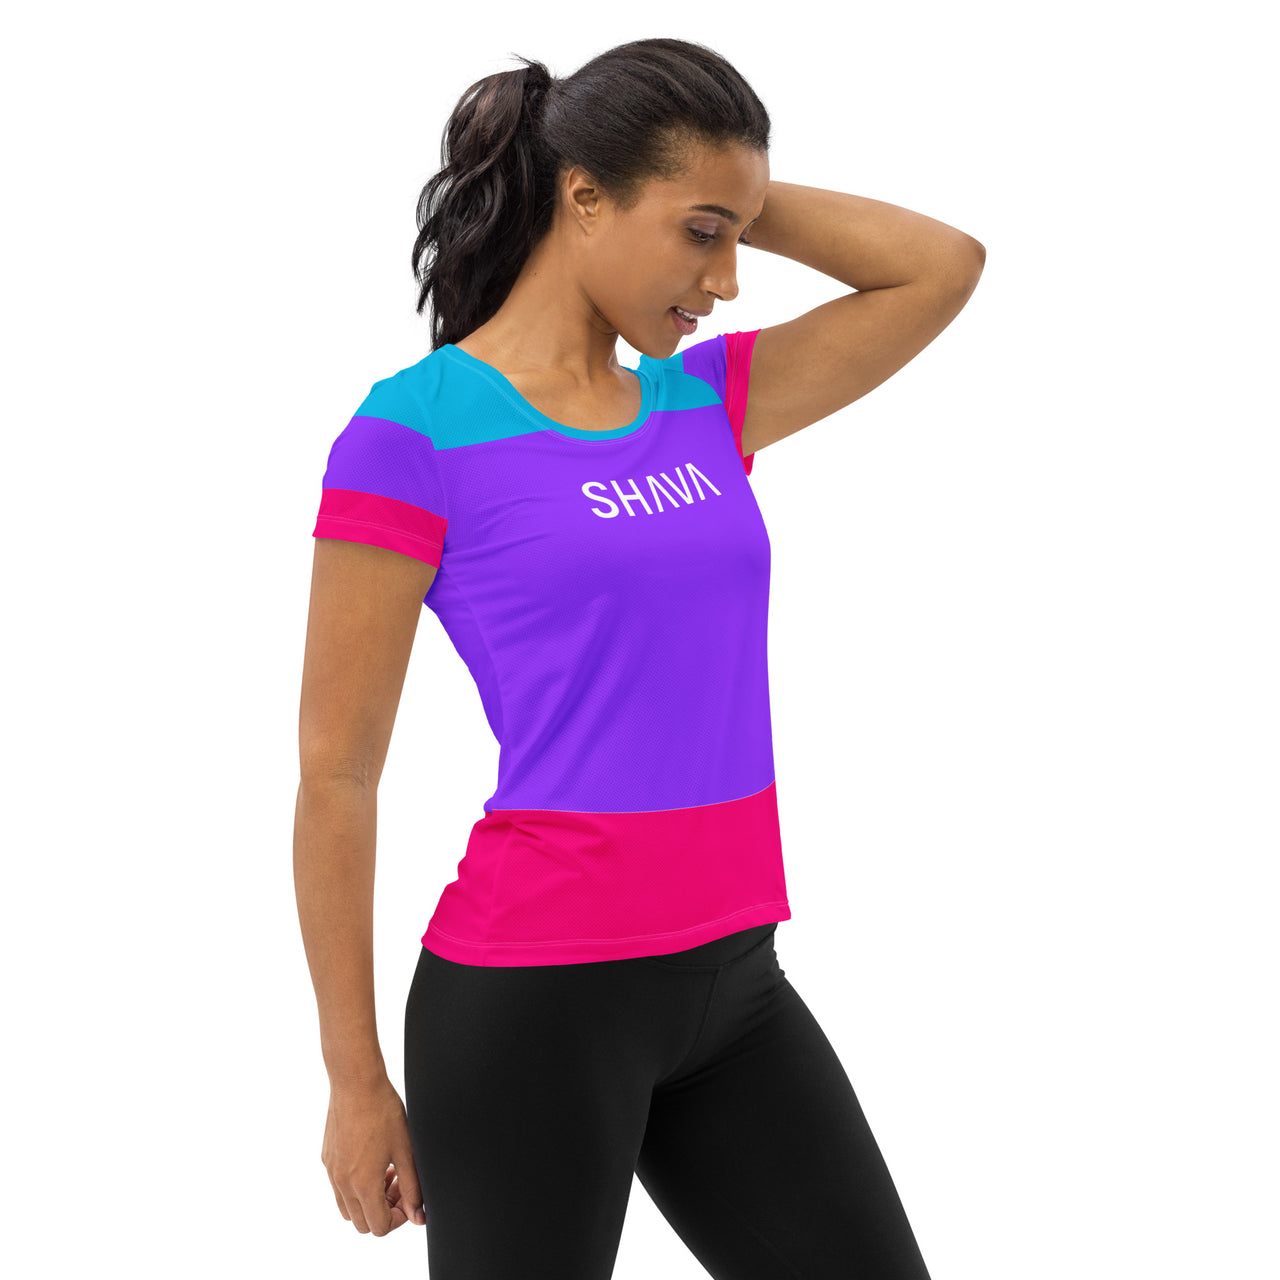 Androgyne Flag LGBTQ T-Shirt Women’s Size SHAVA CO